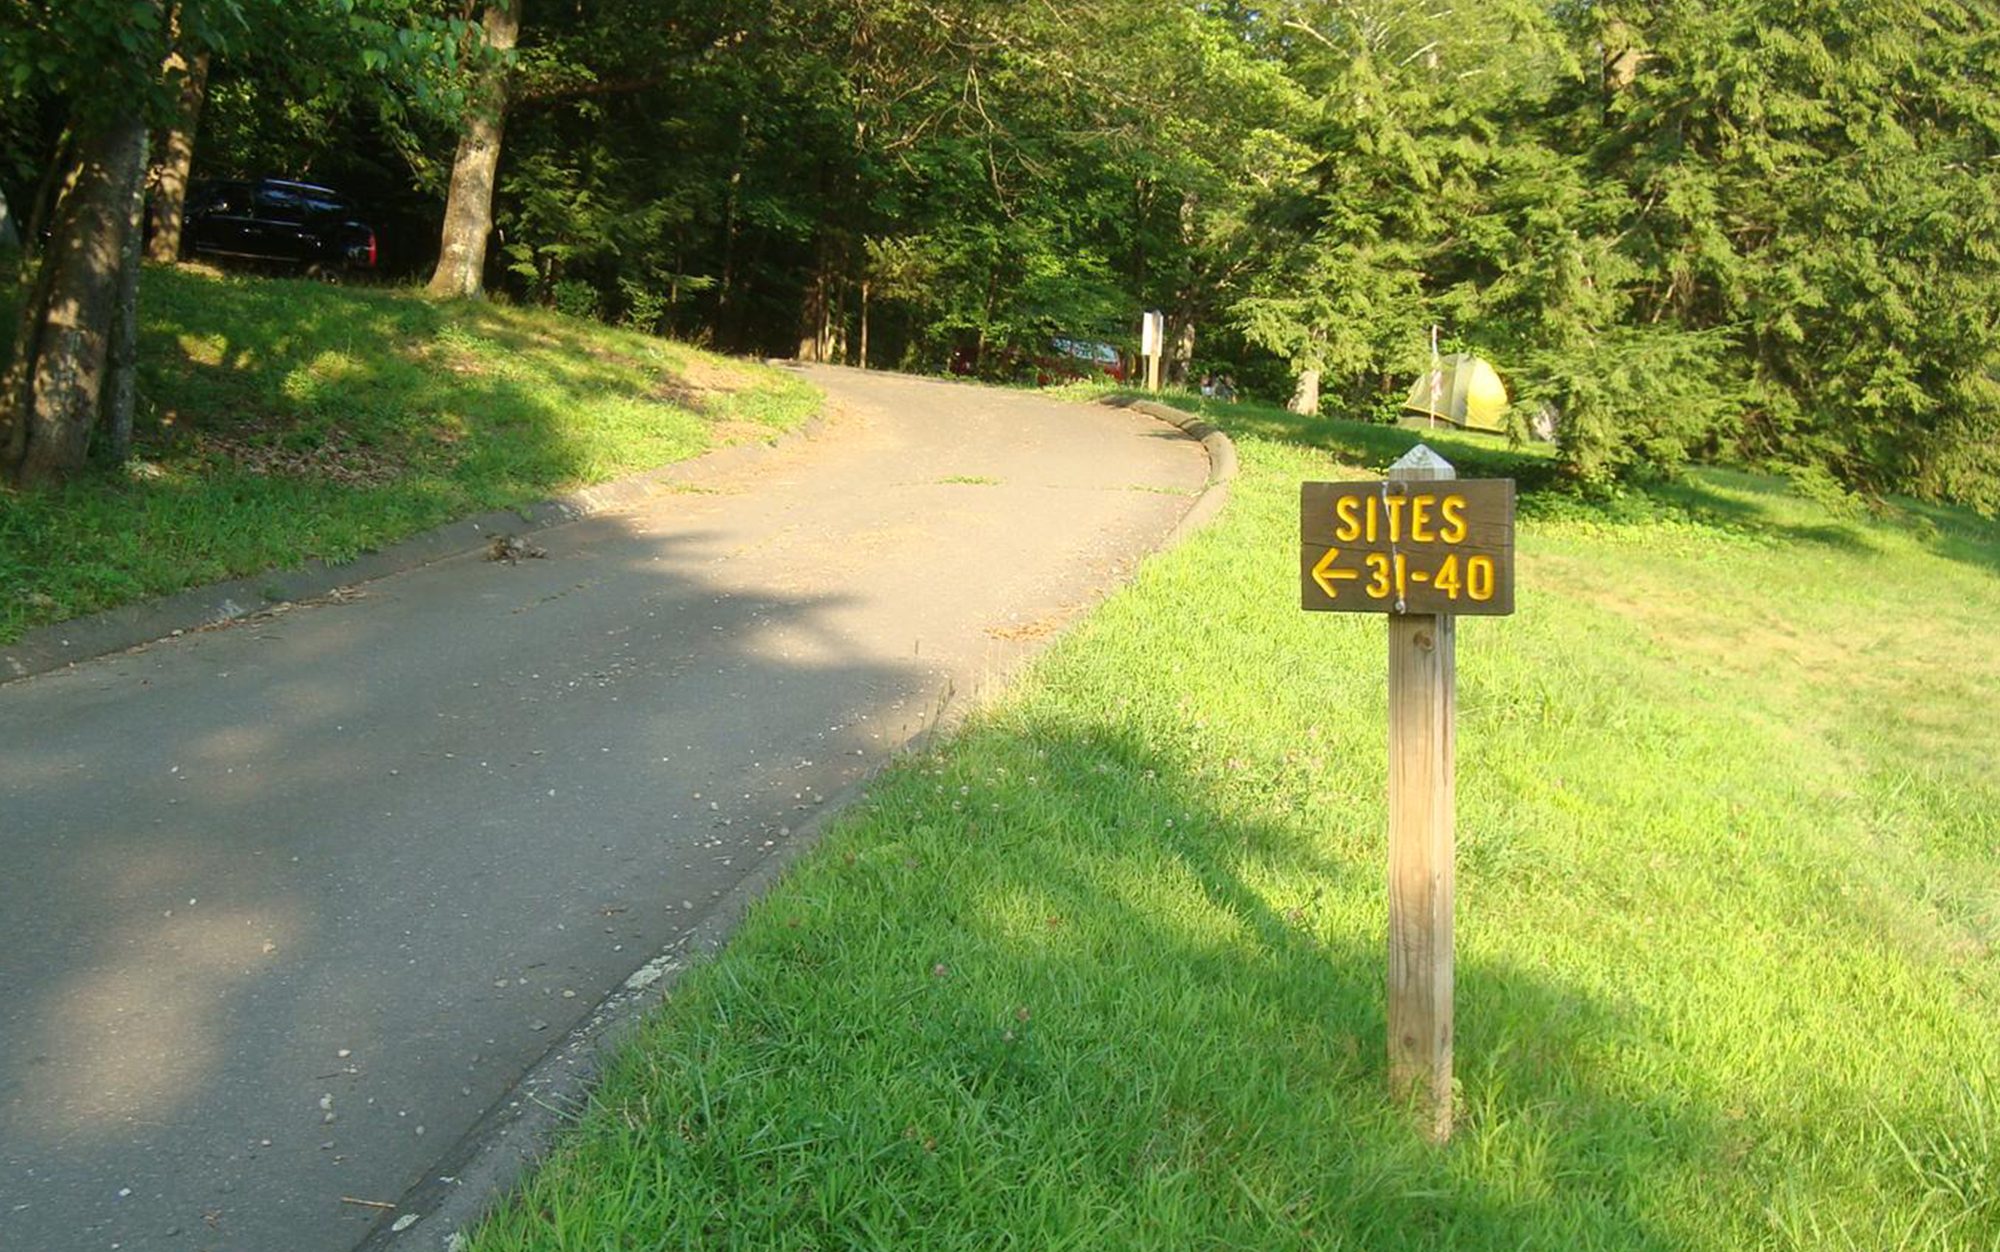 A sign points towards campsites.